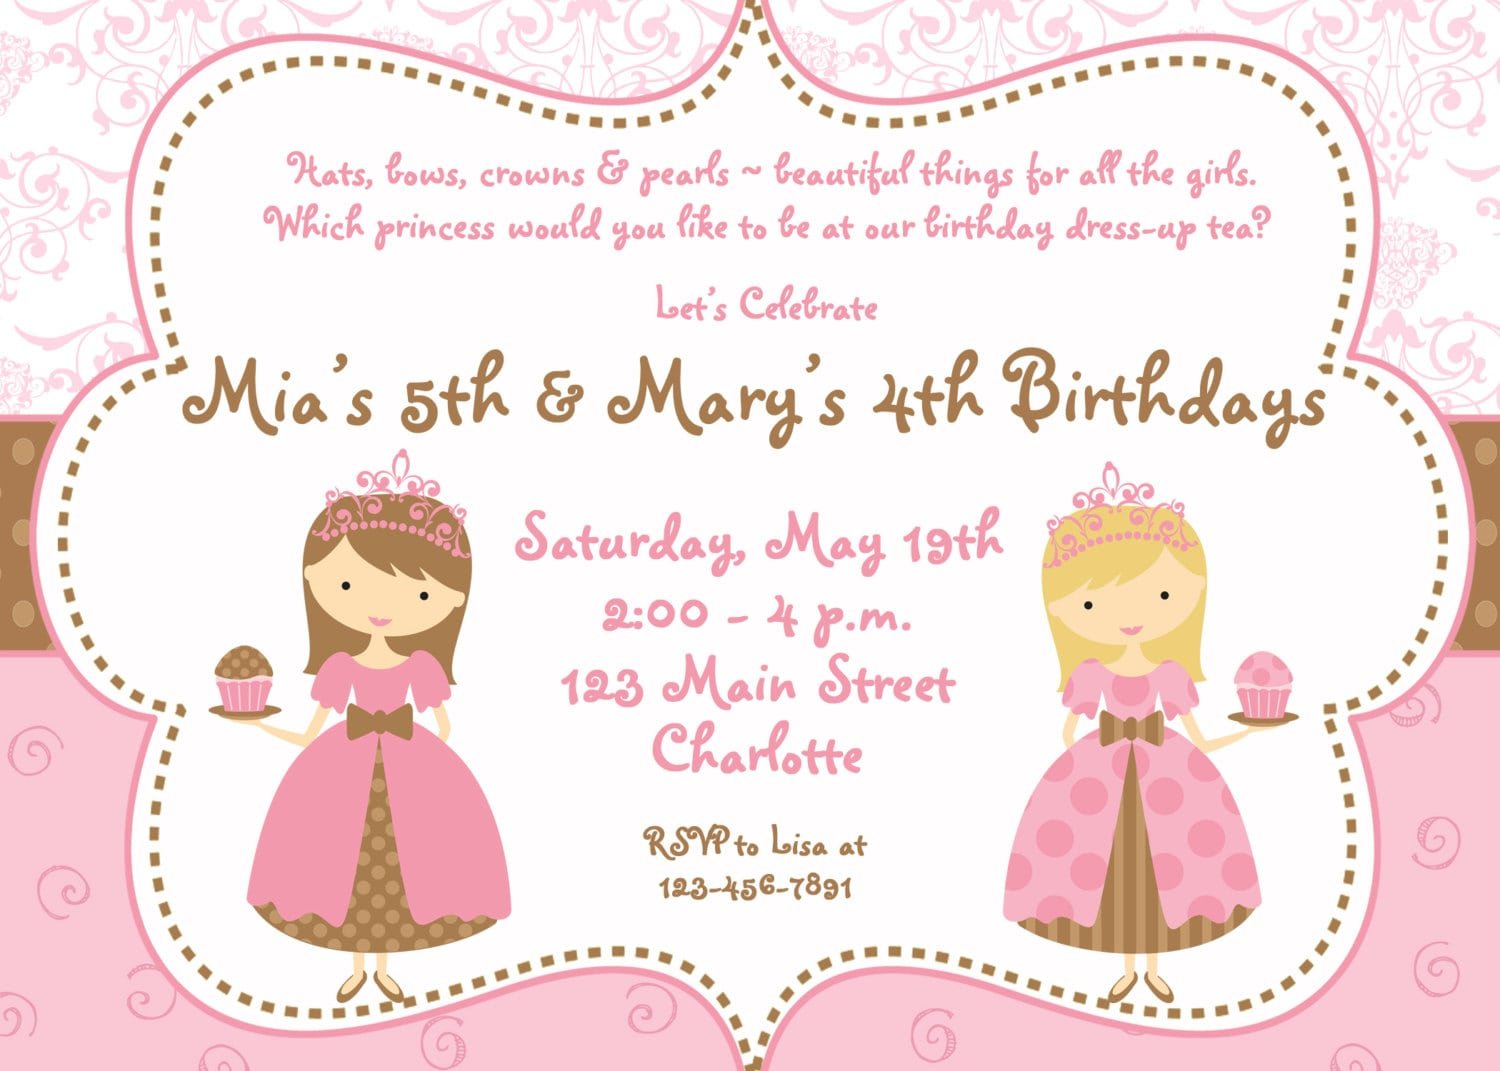 Two Princesses Tea Party Birthday Invitation, Via Etsy